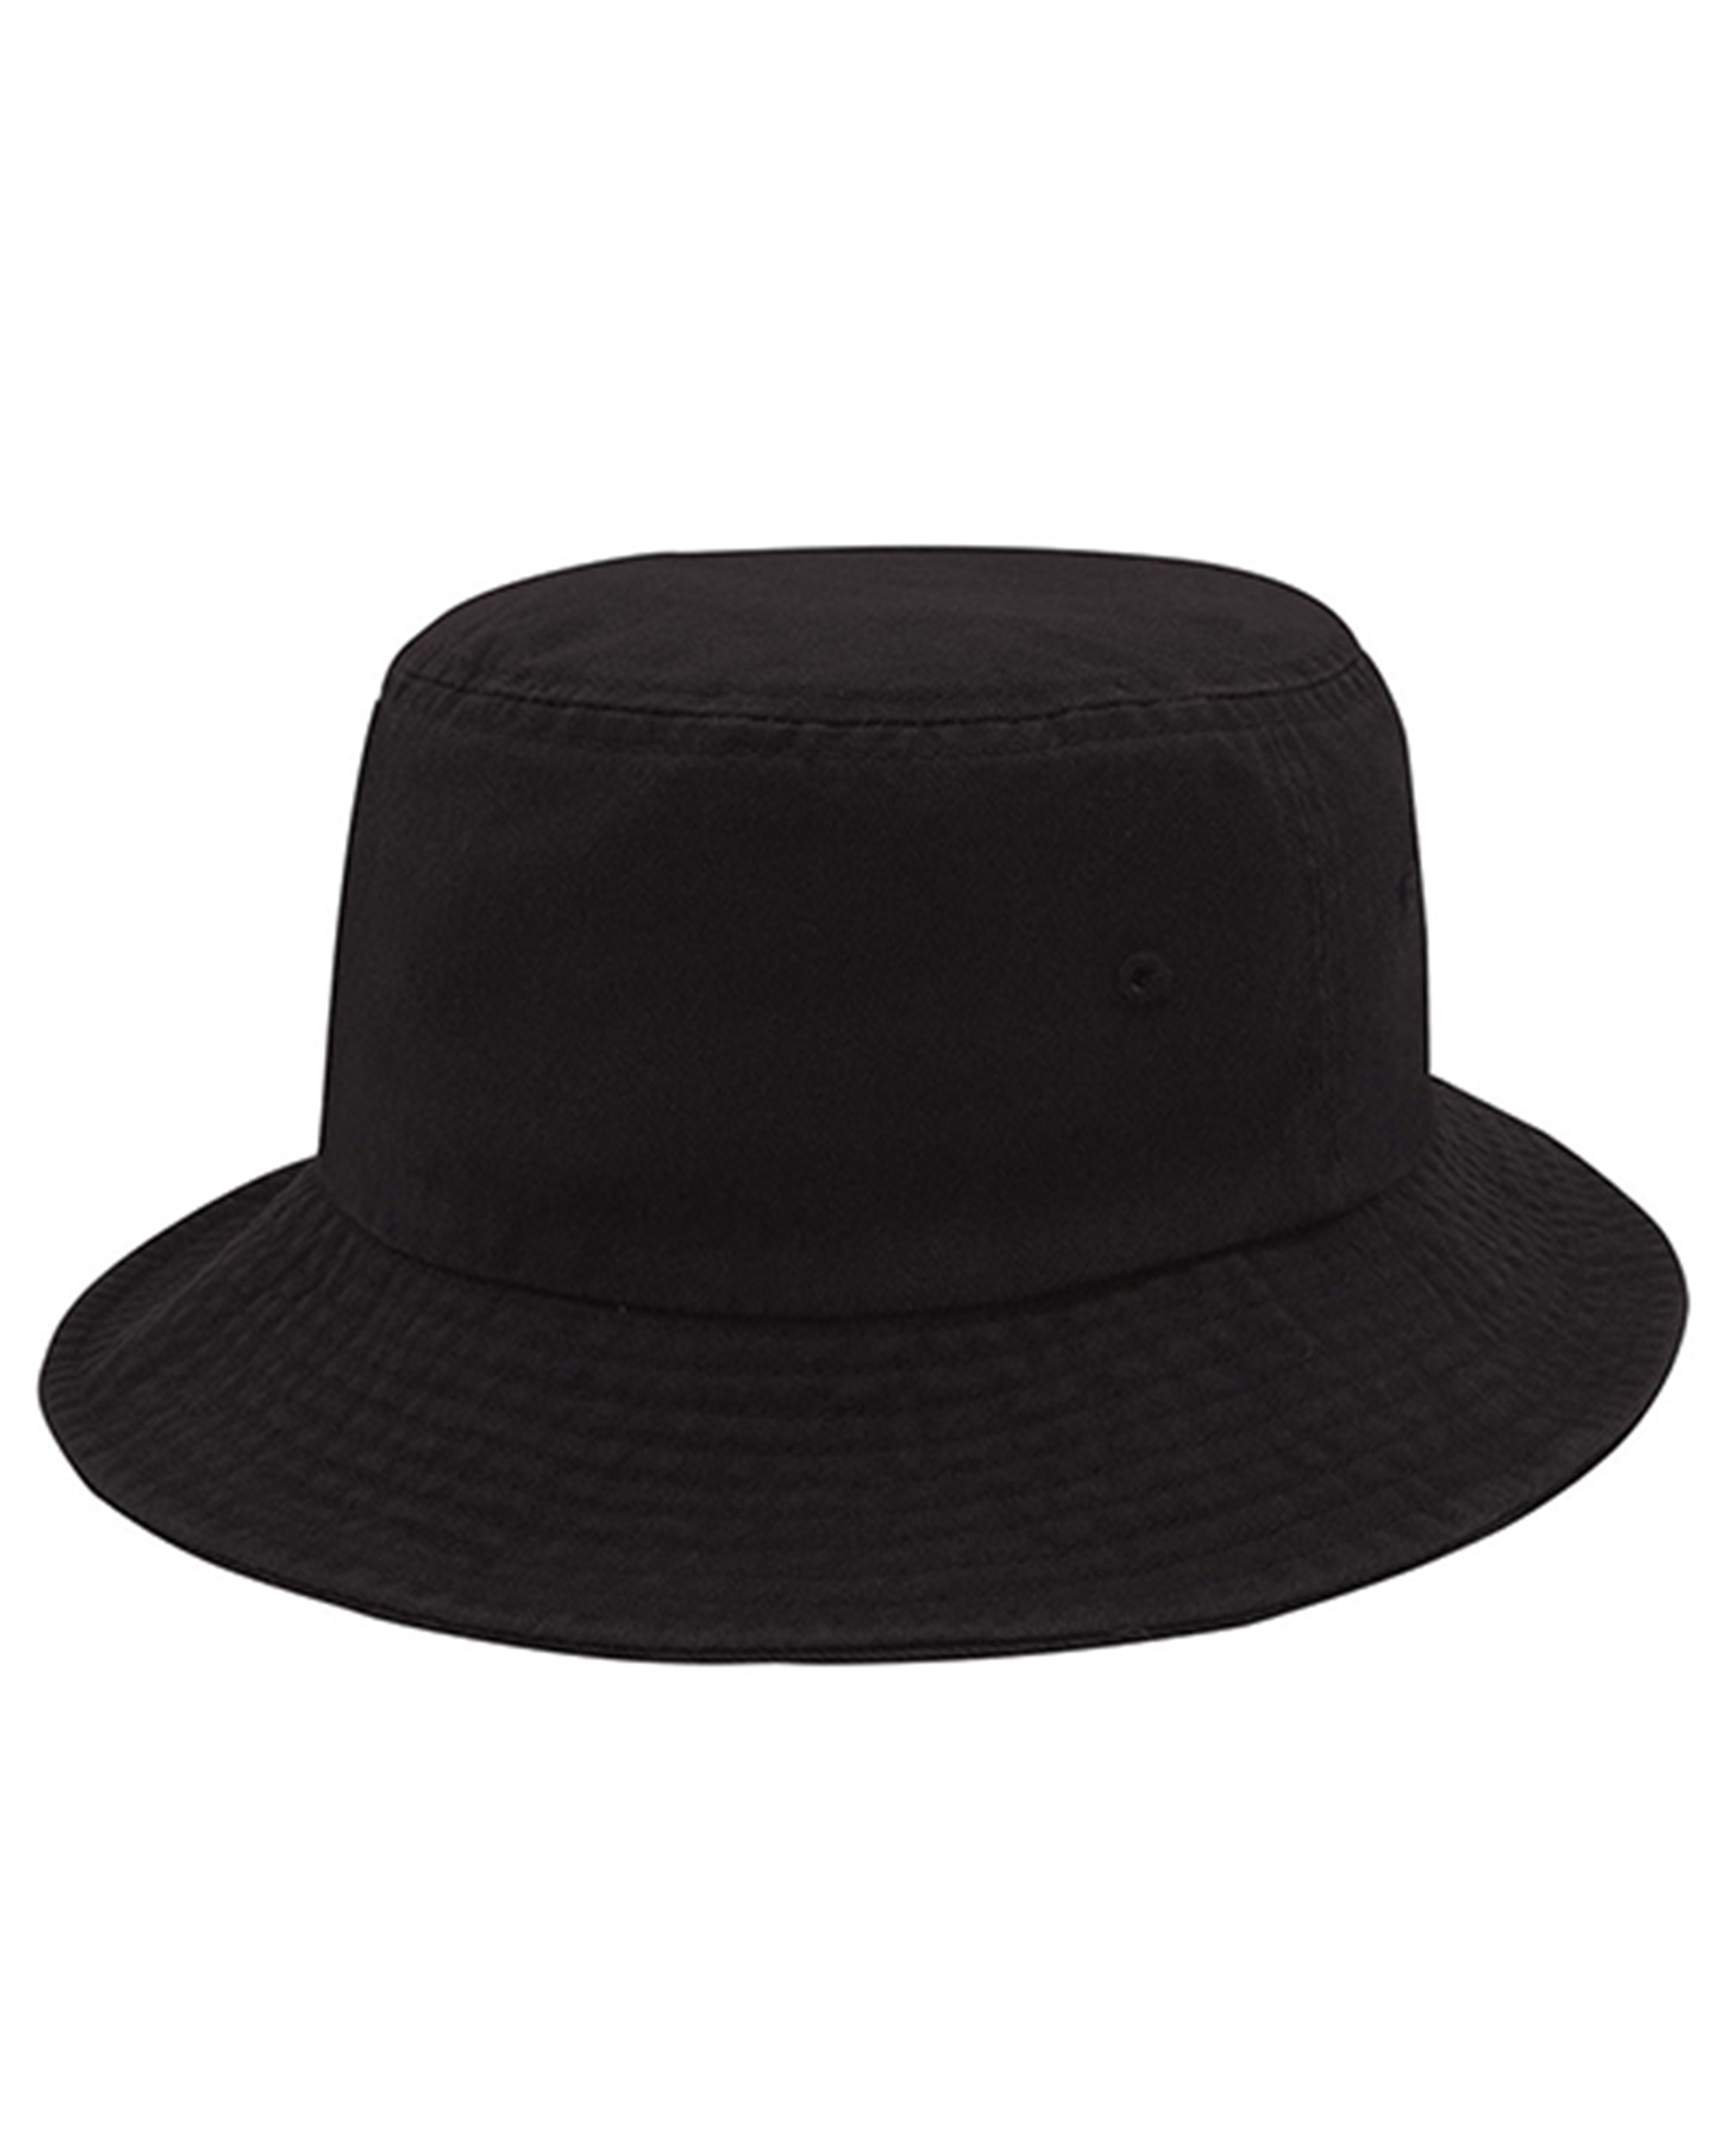 Mega Cap® 7850B Cotton Twill Bucket Hat